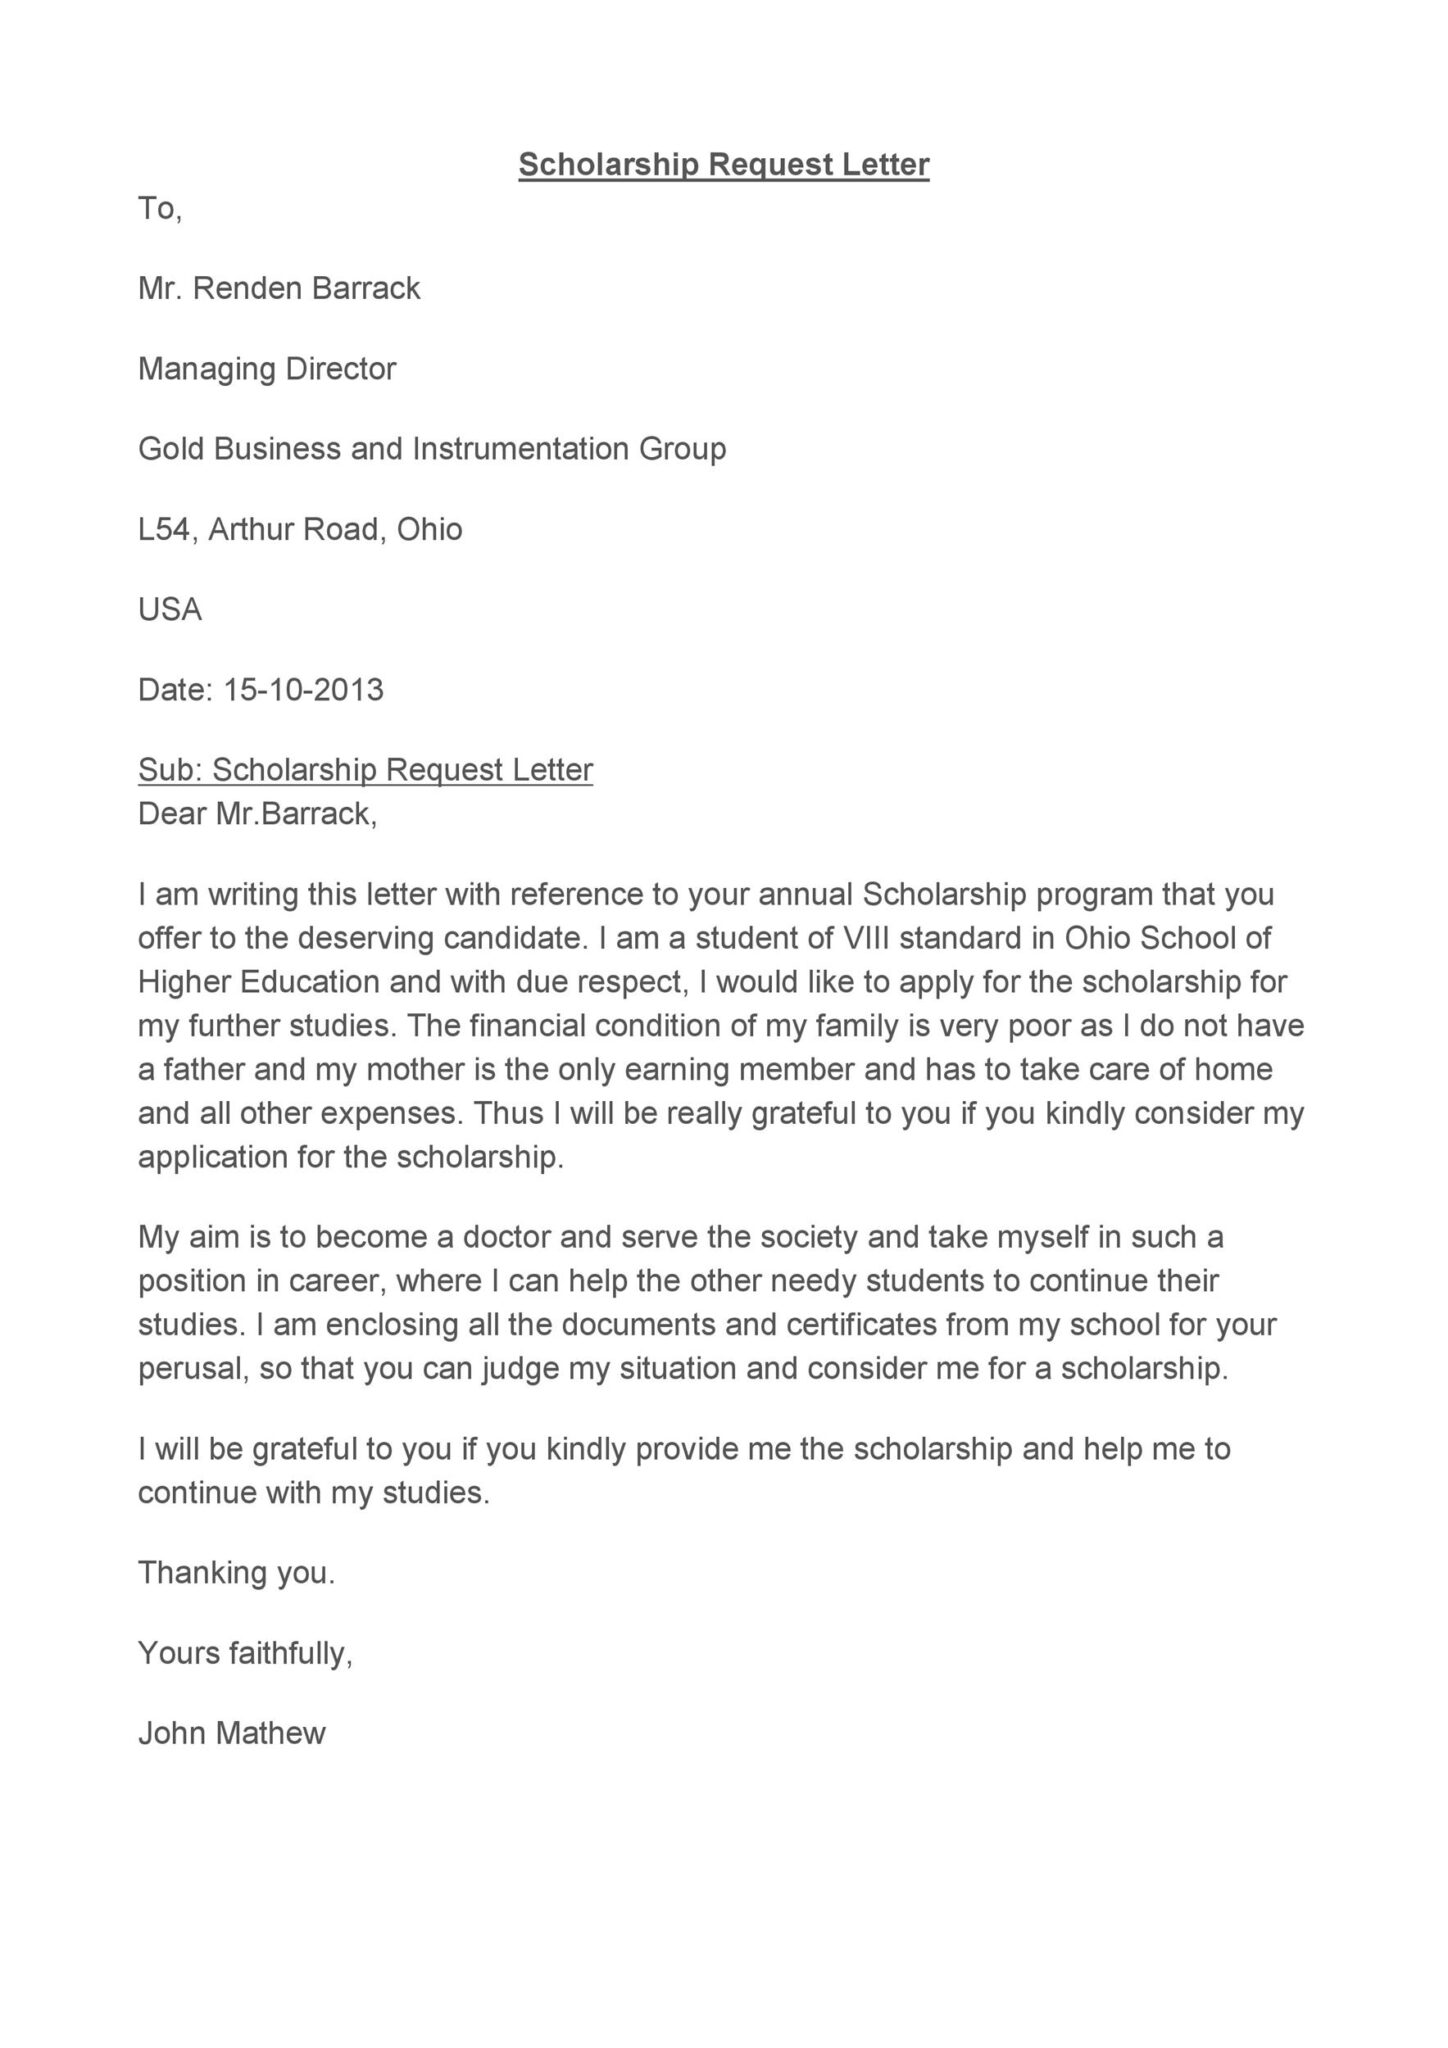 Scholarship Application Letter 13 1448x2048 